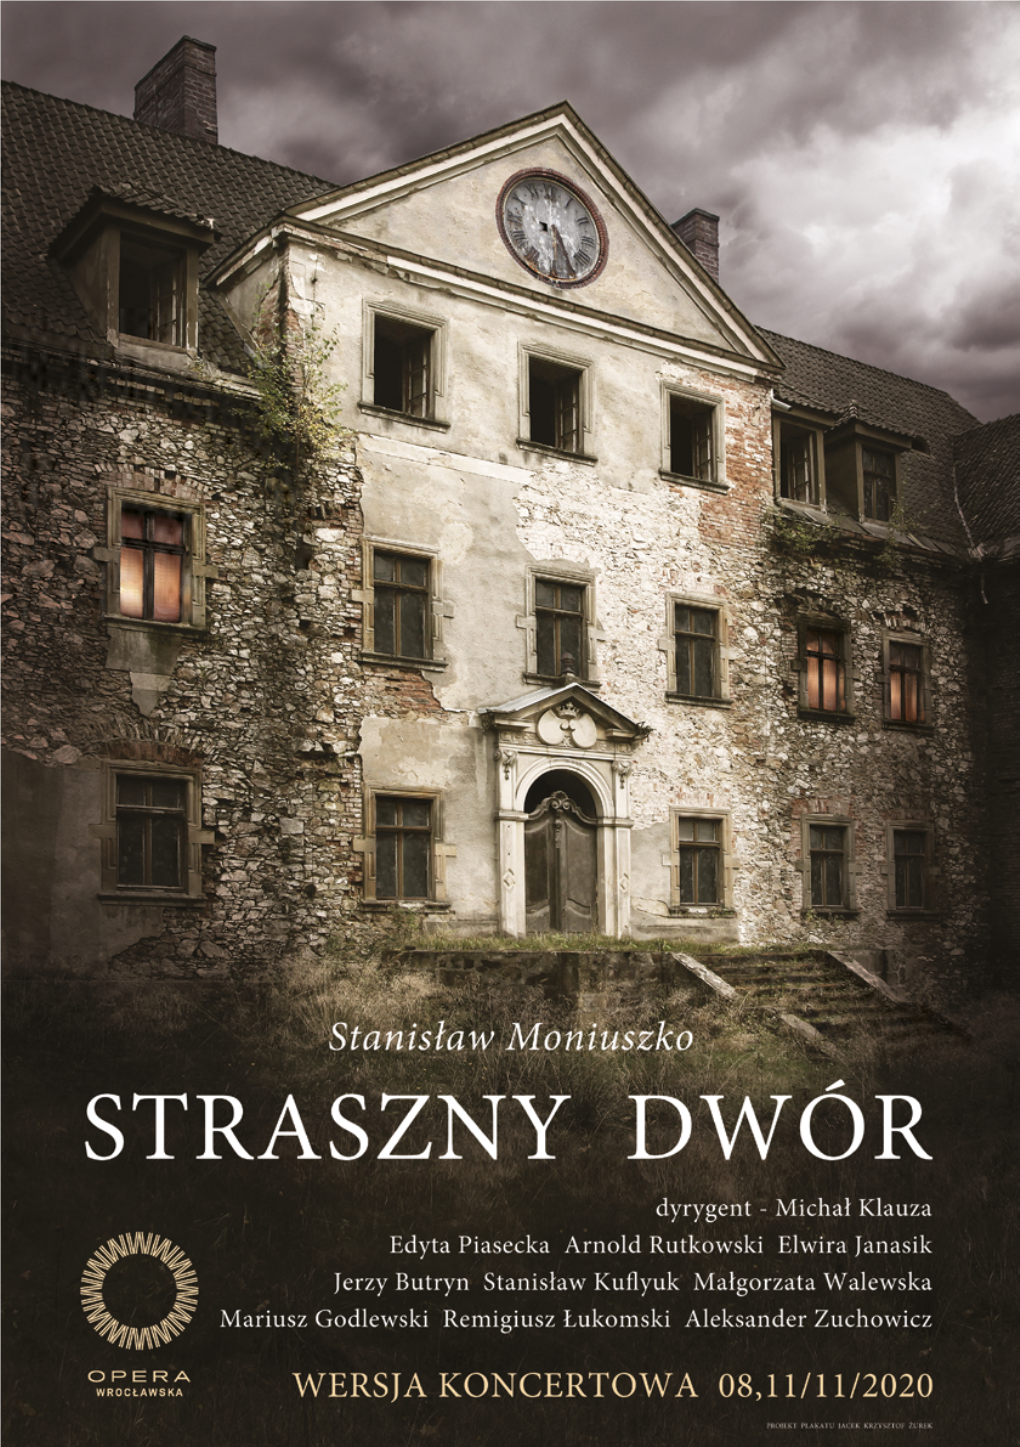 STRASZNY DWÓR the Haunted Manor